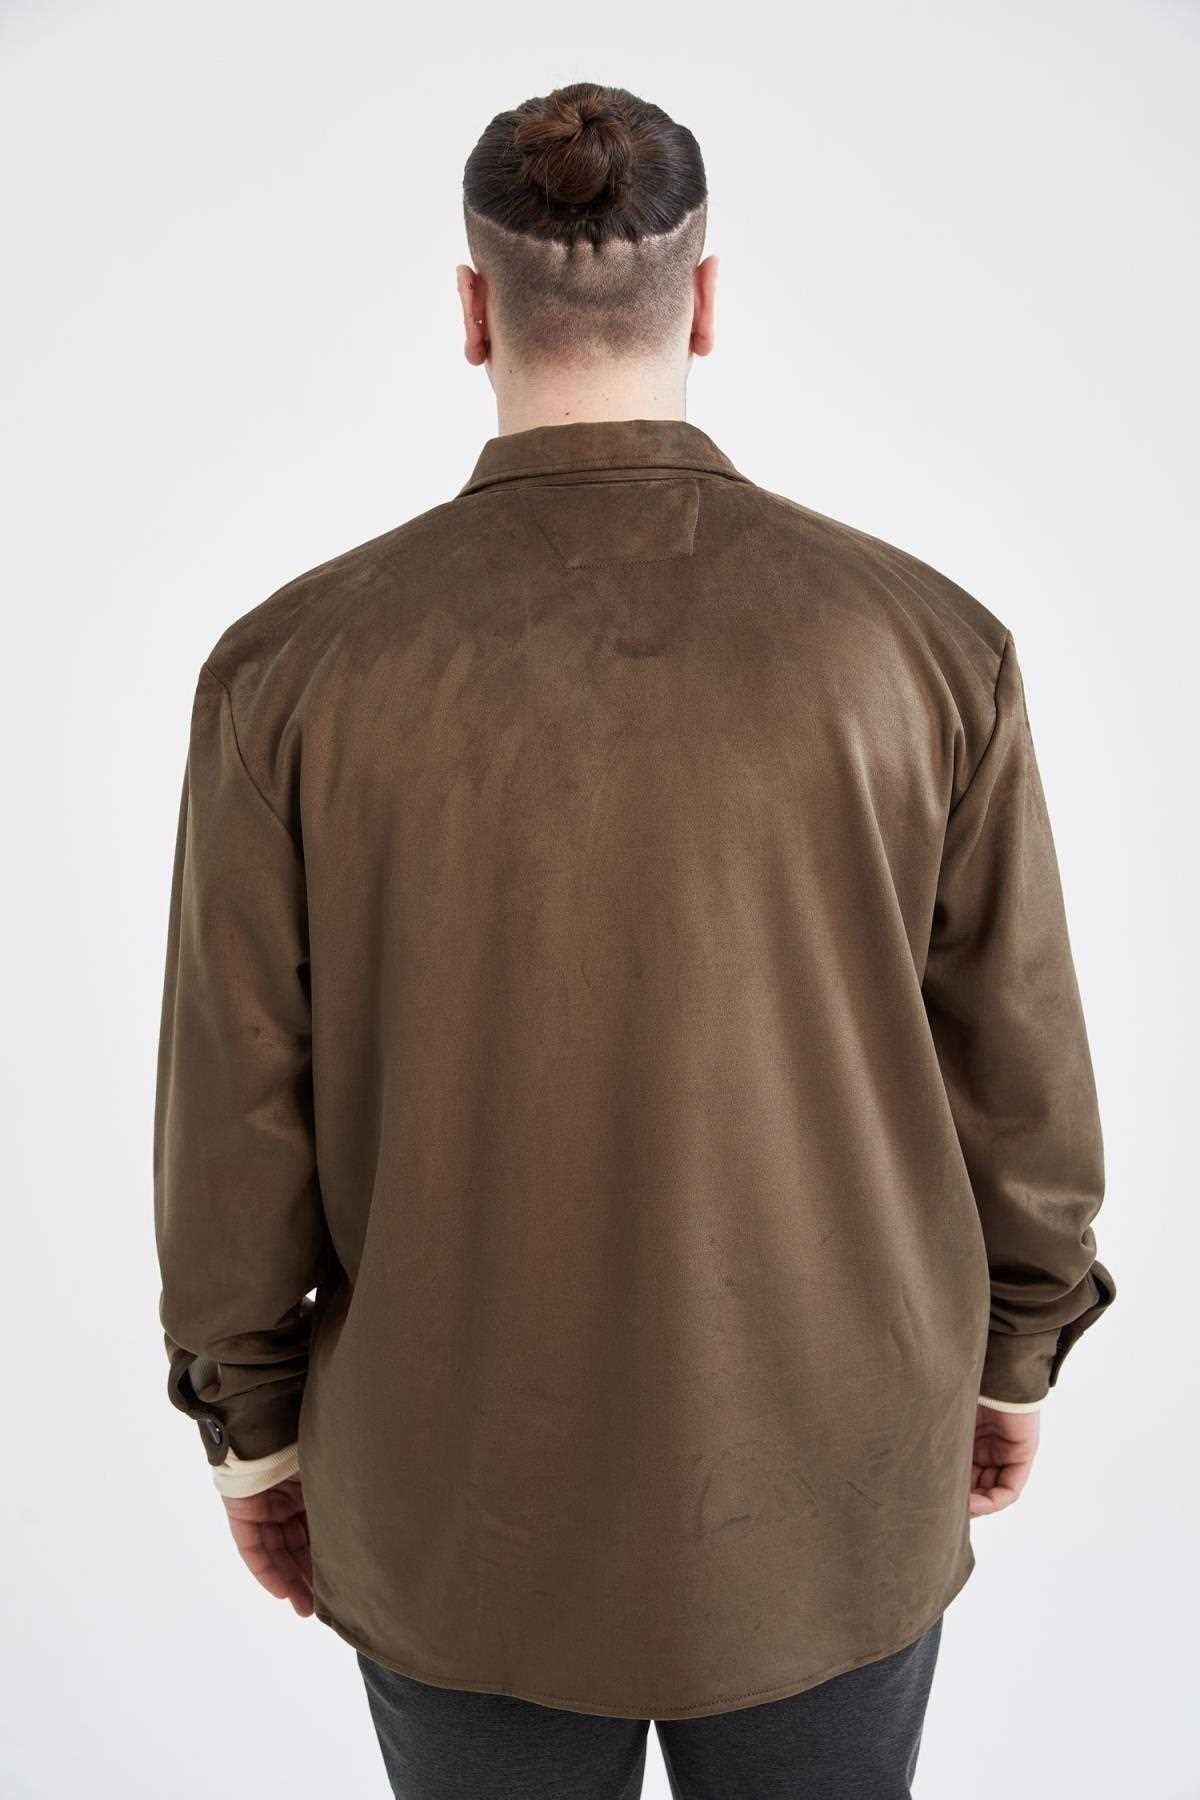 فروش پستی پیراهن مردانه زیبا دفاکتو ترکیه Haki-KH131 ty145763254